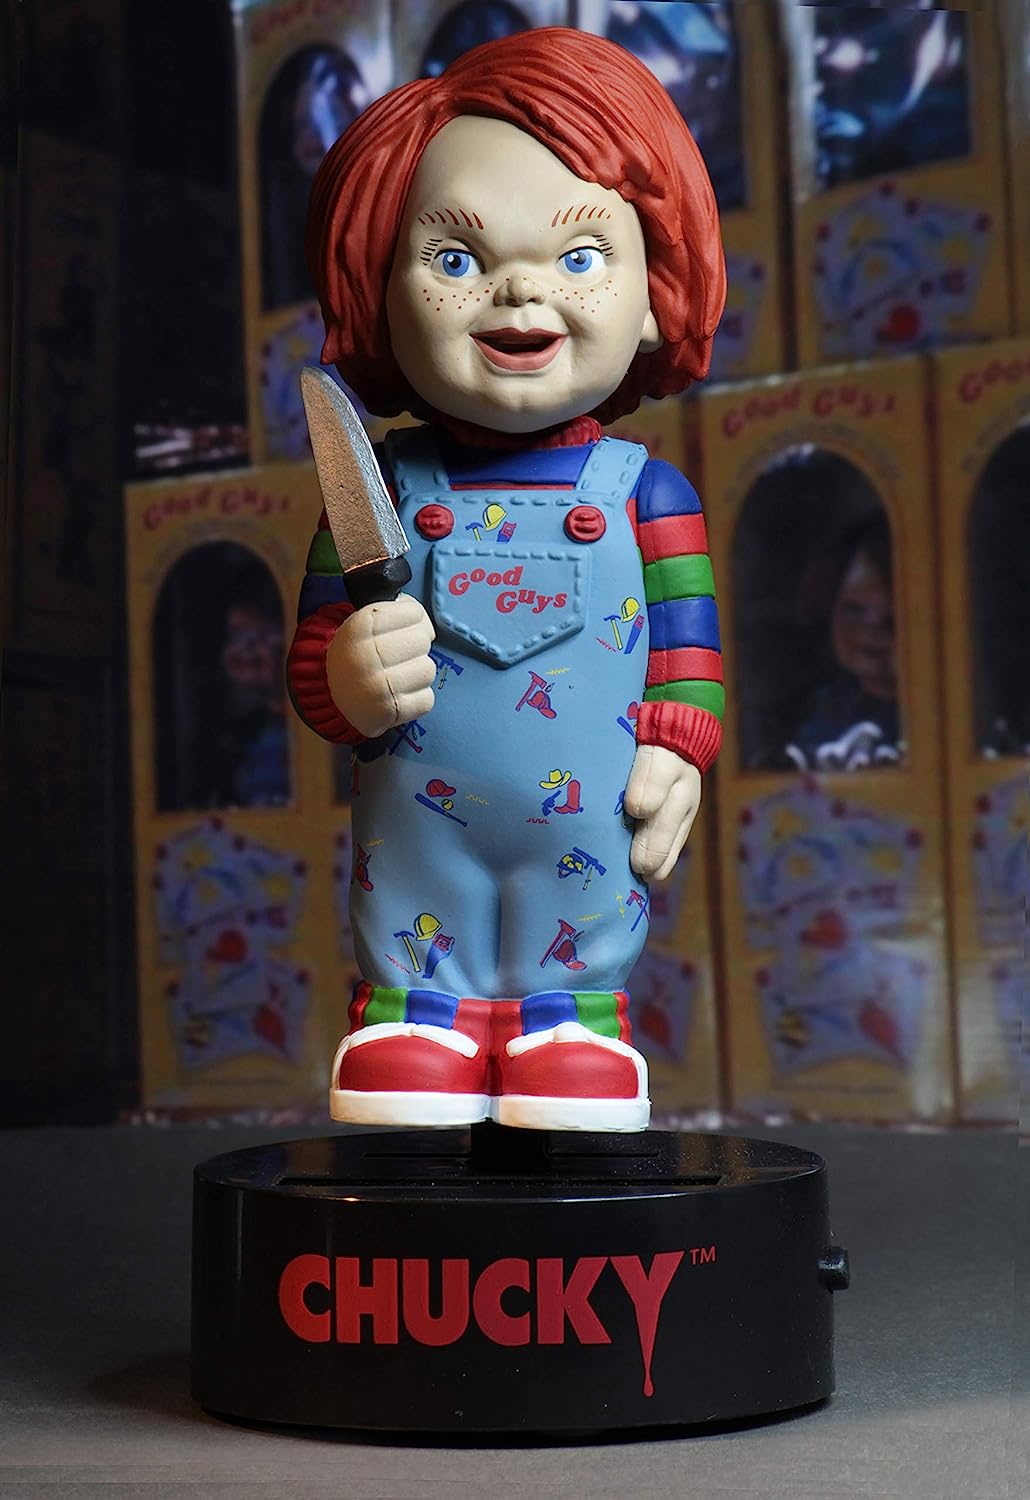 Chucky Body Knocker